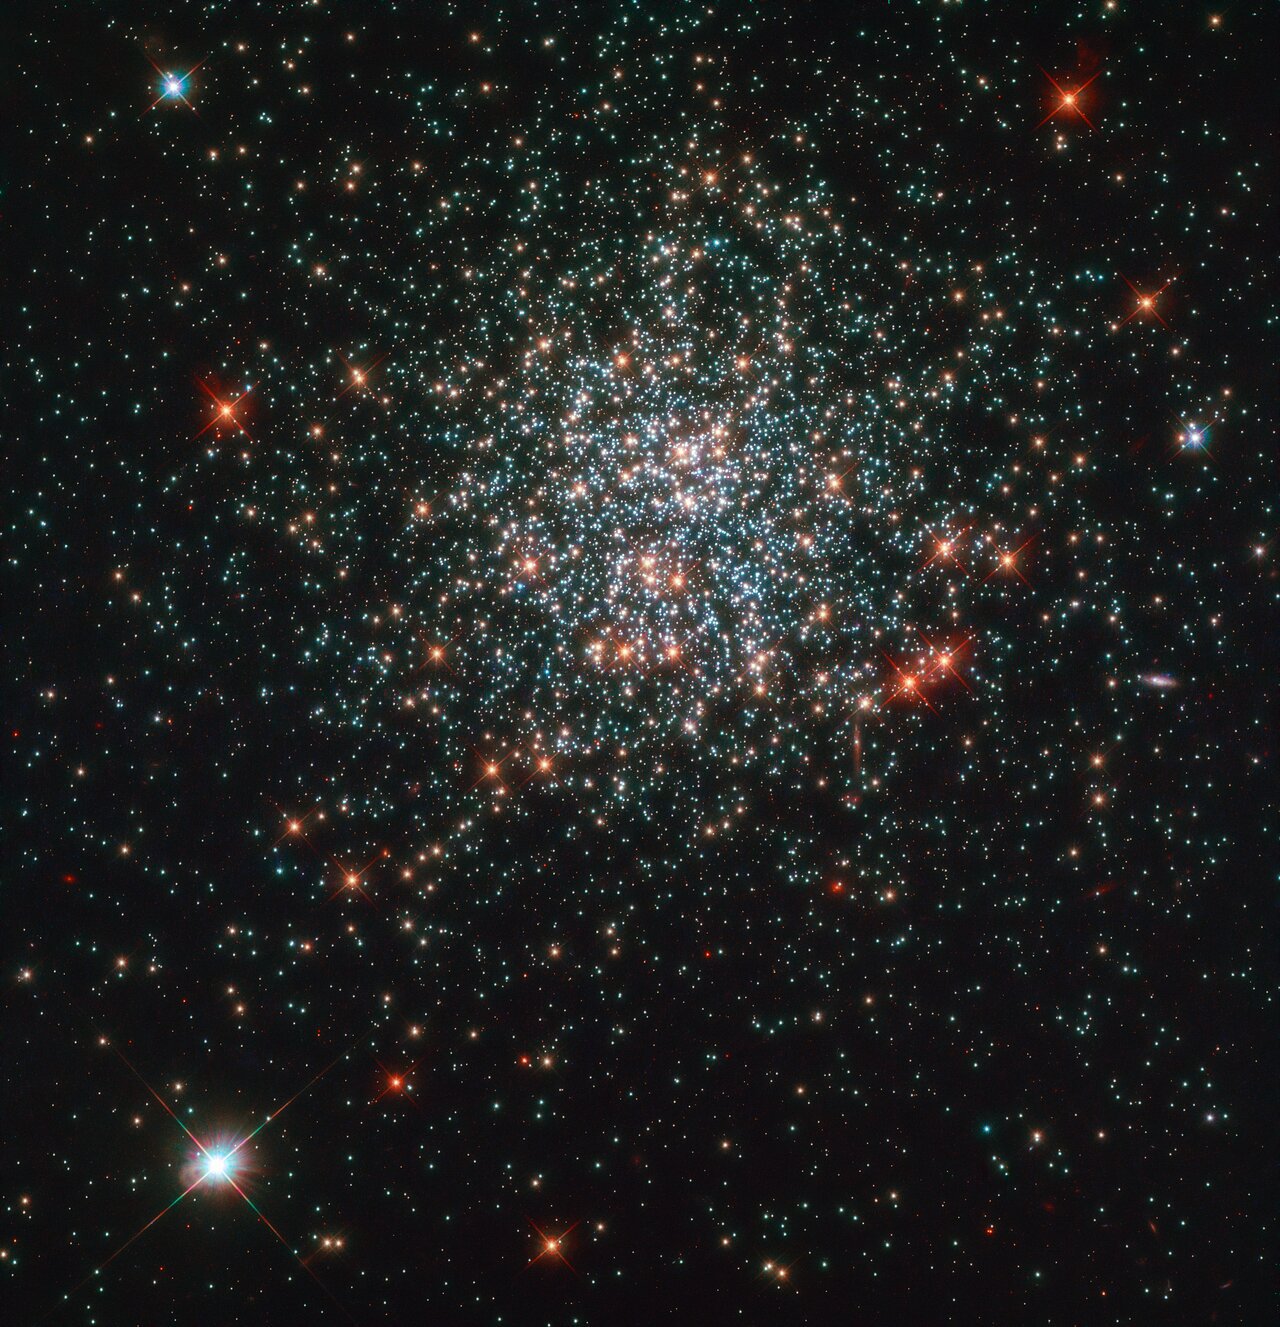 ESA/Hubble & NASA, L. Girardi